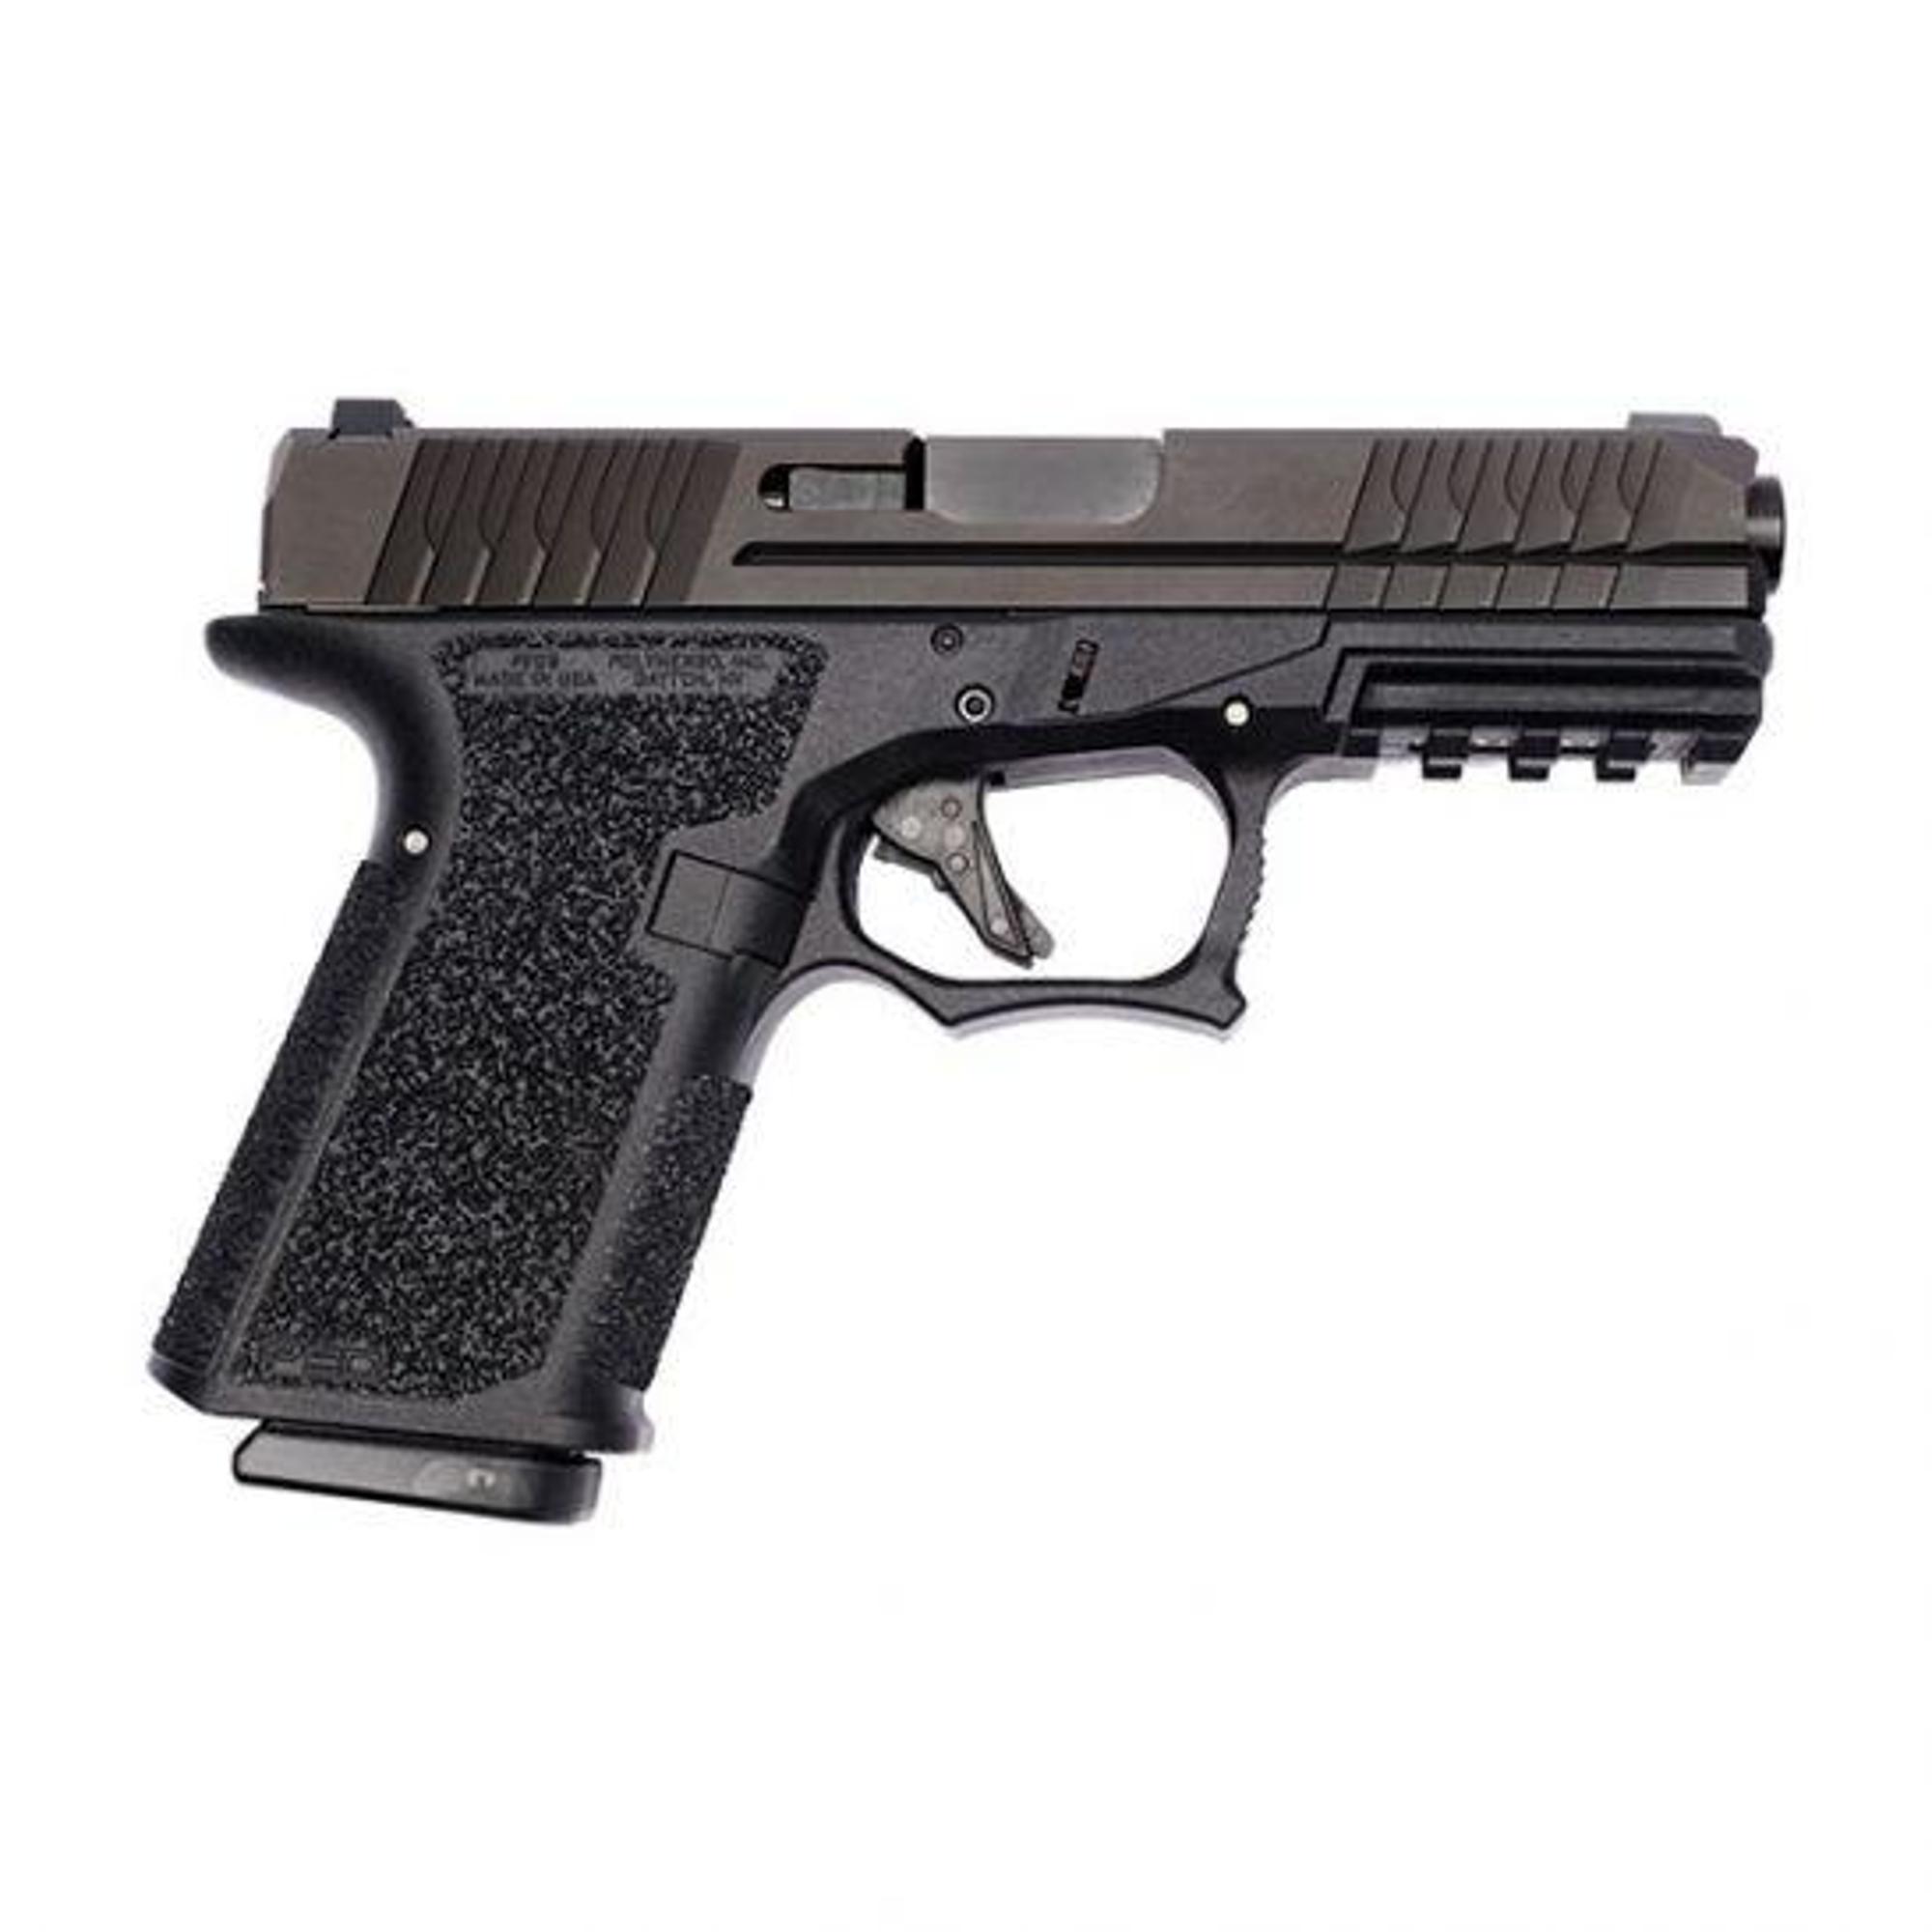 Pfc9 Complete 9mm Pistol - Black